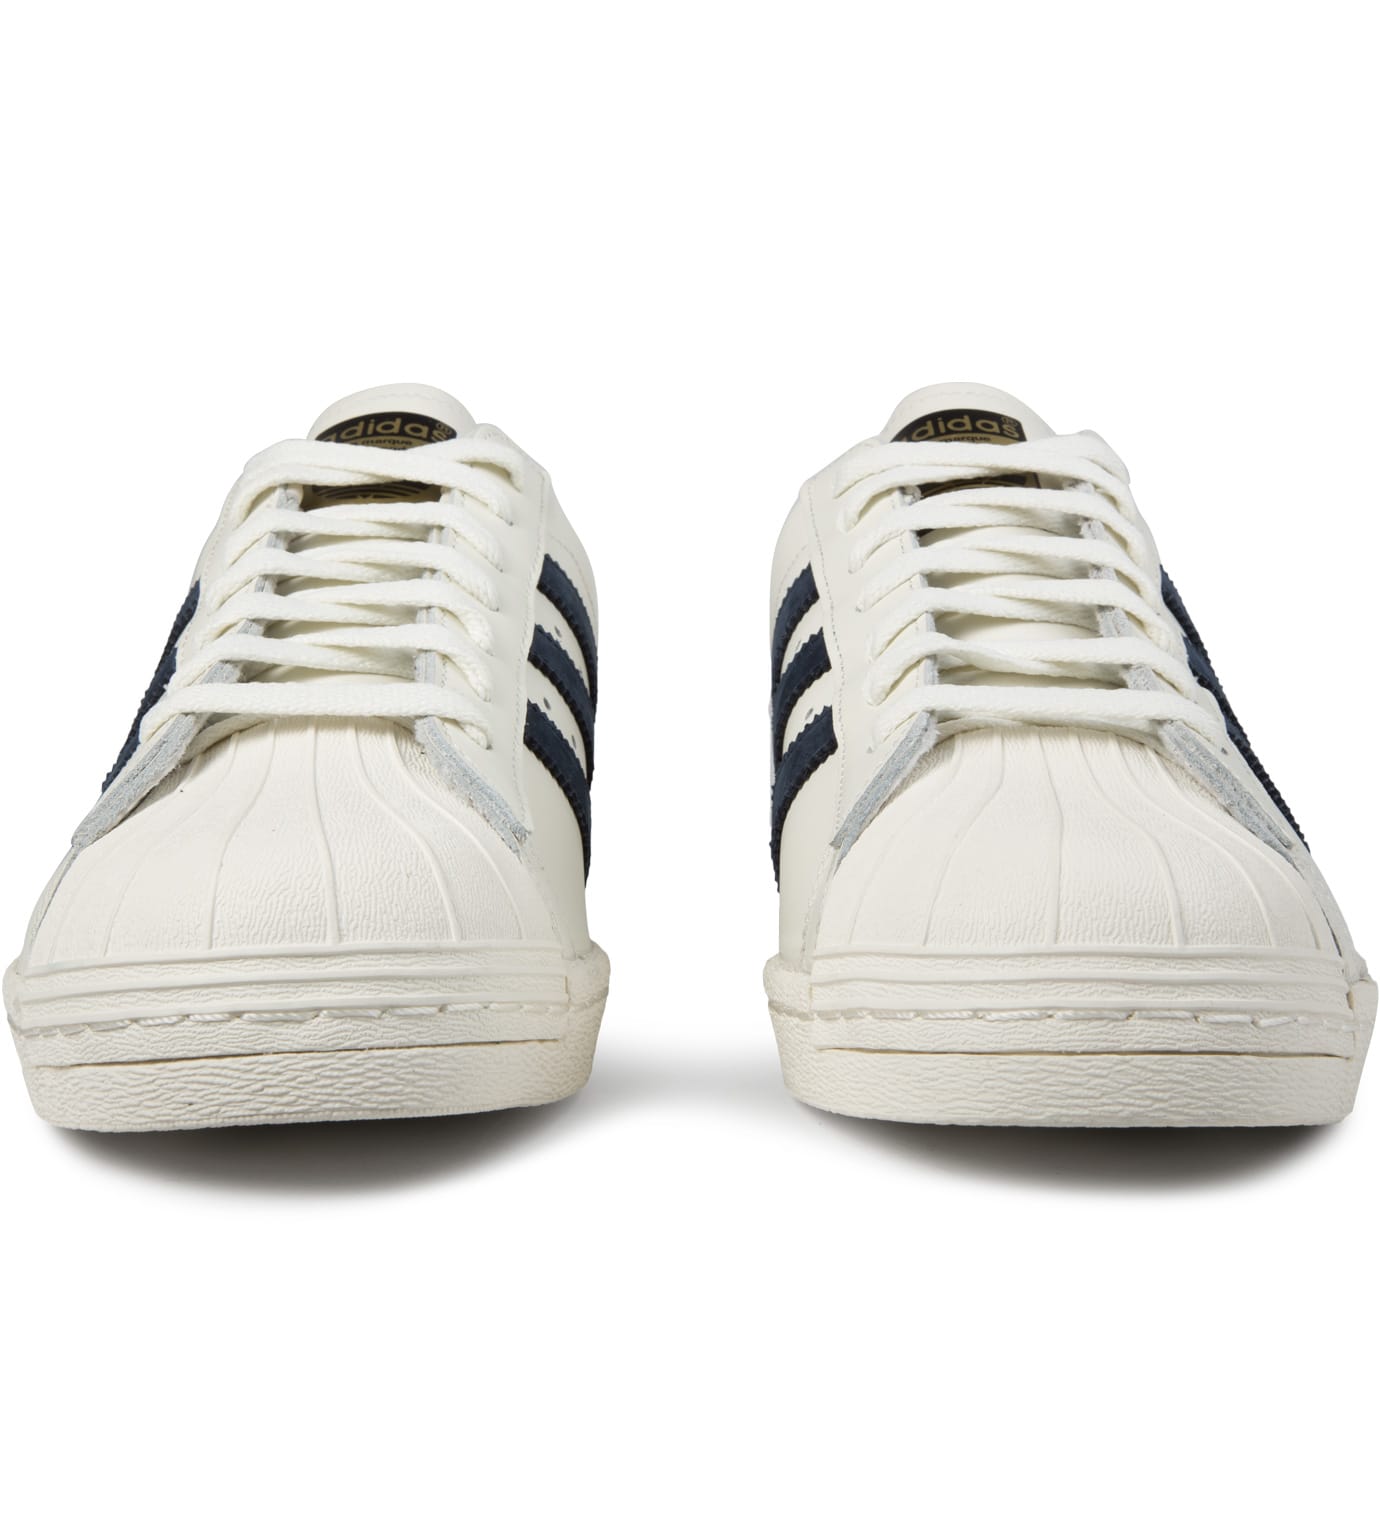 Adidas Originals White/Navy Superstar 80s Vintage Deluxe Shoes HBX